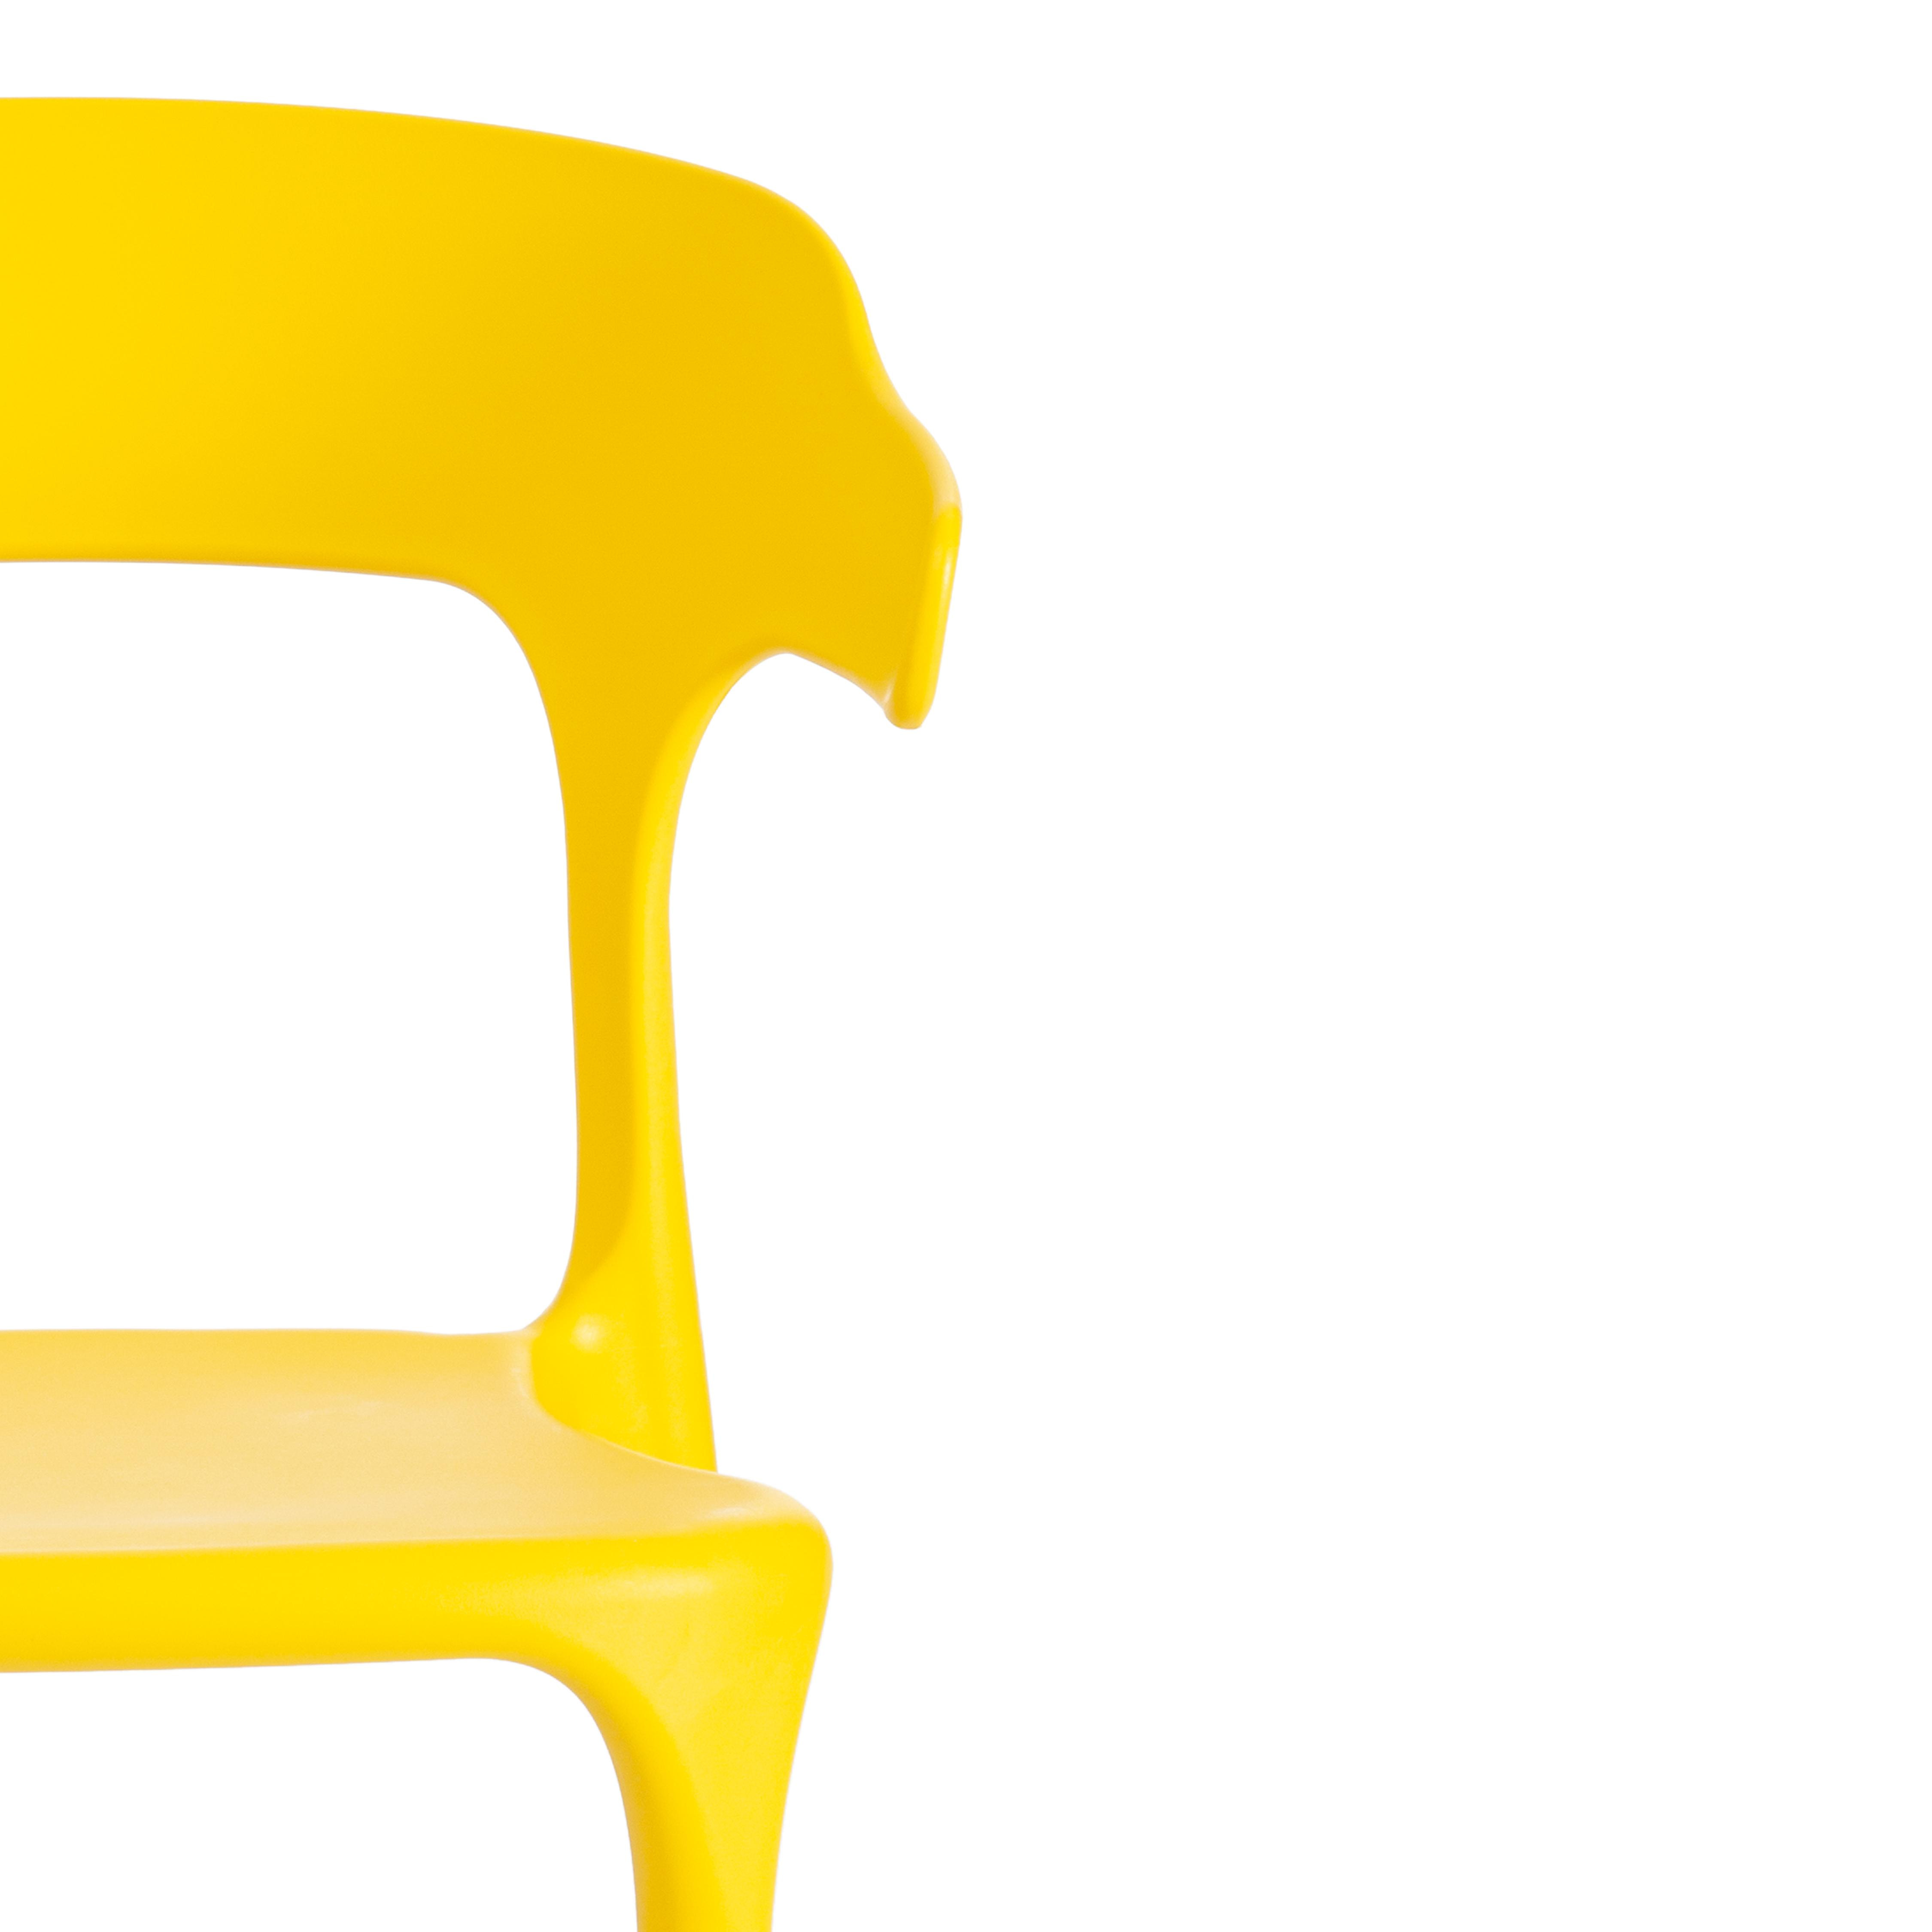 Стул TON (mod. PC33) пластик, 49 x 52 x 74 см, Yellow (Желтый) 11